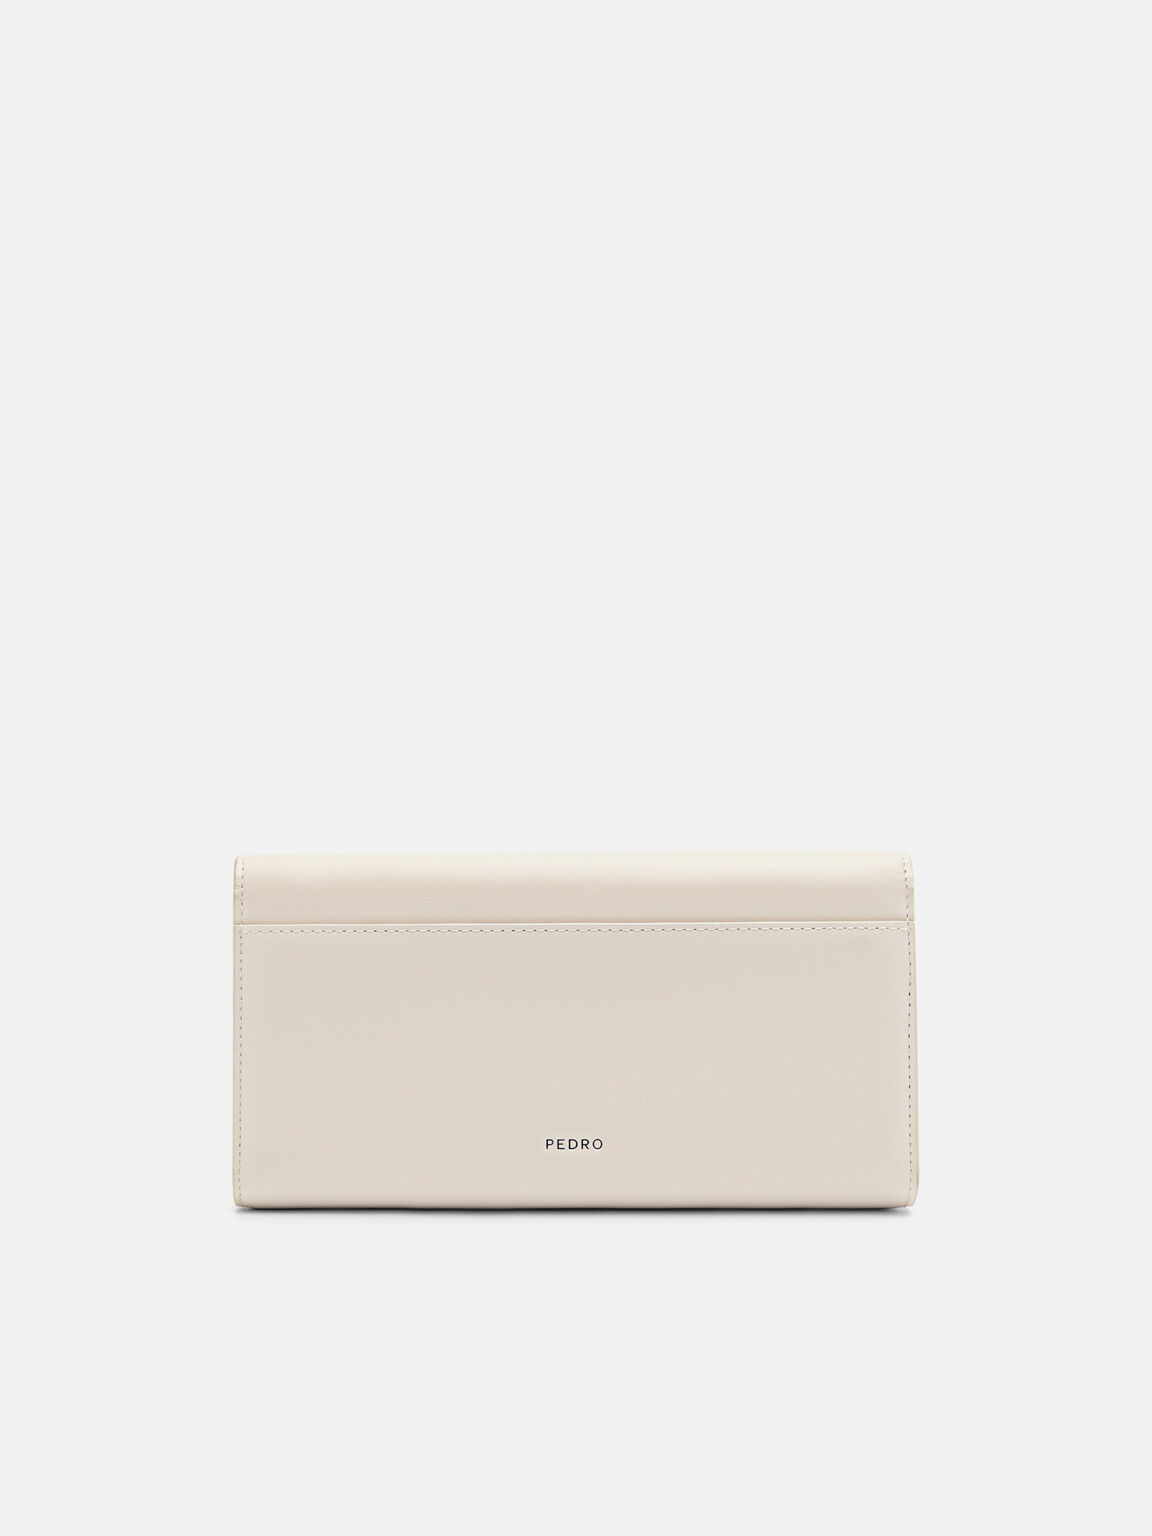 PEDRO Studio Leather Bi-Fold Wallet, Cream